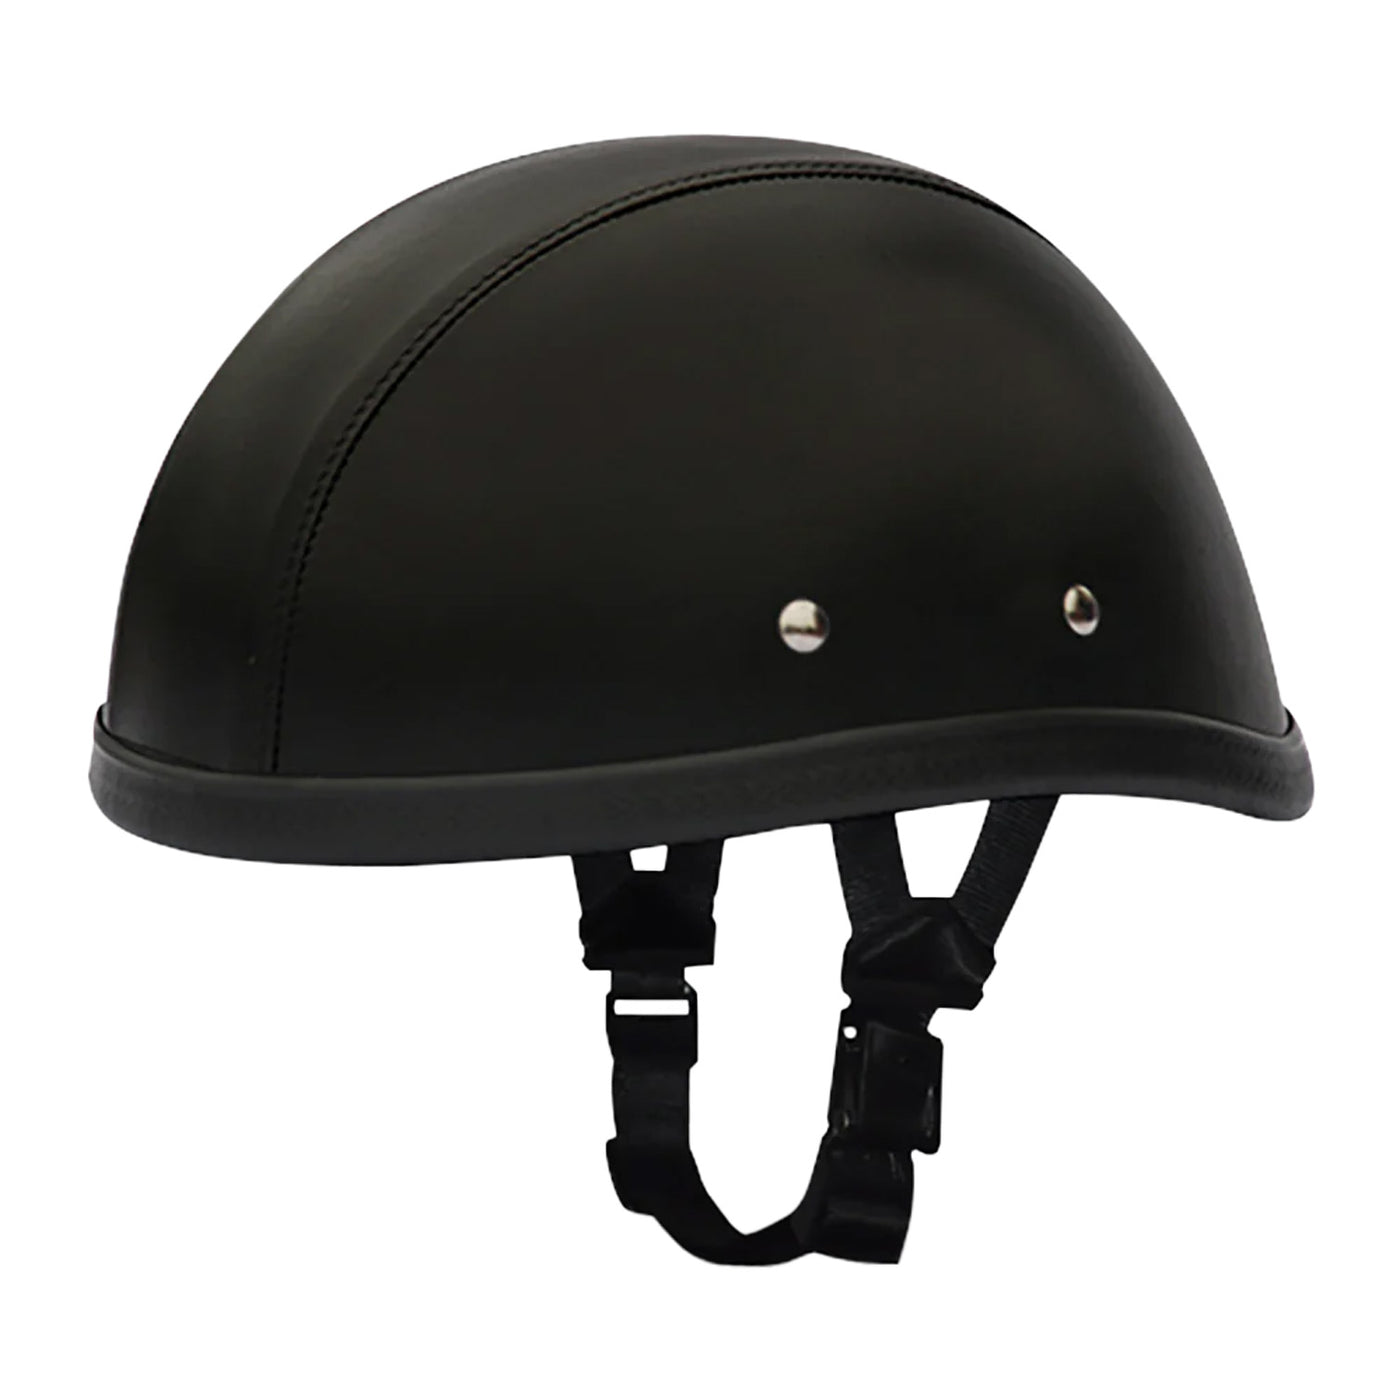 Daytona Helmets Novelty Eagle - Leather Covered